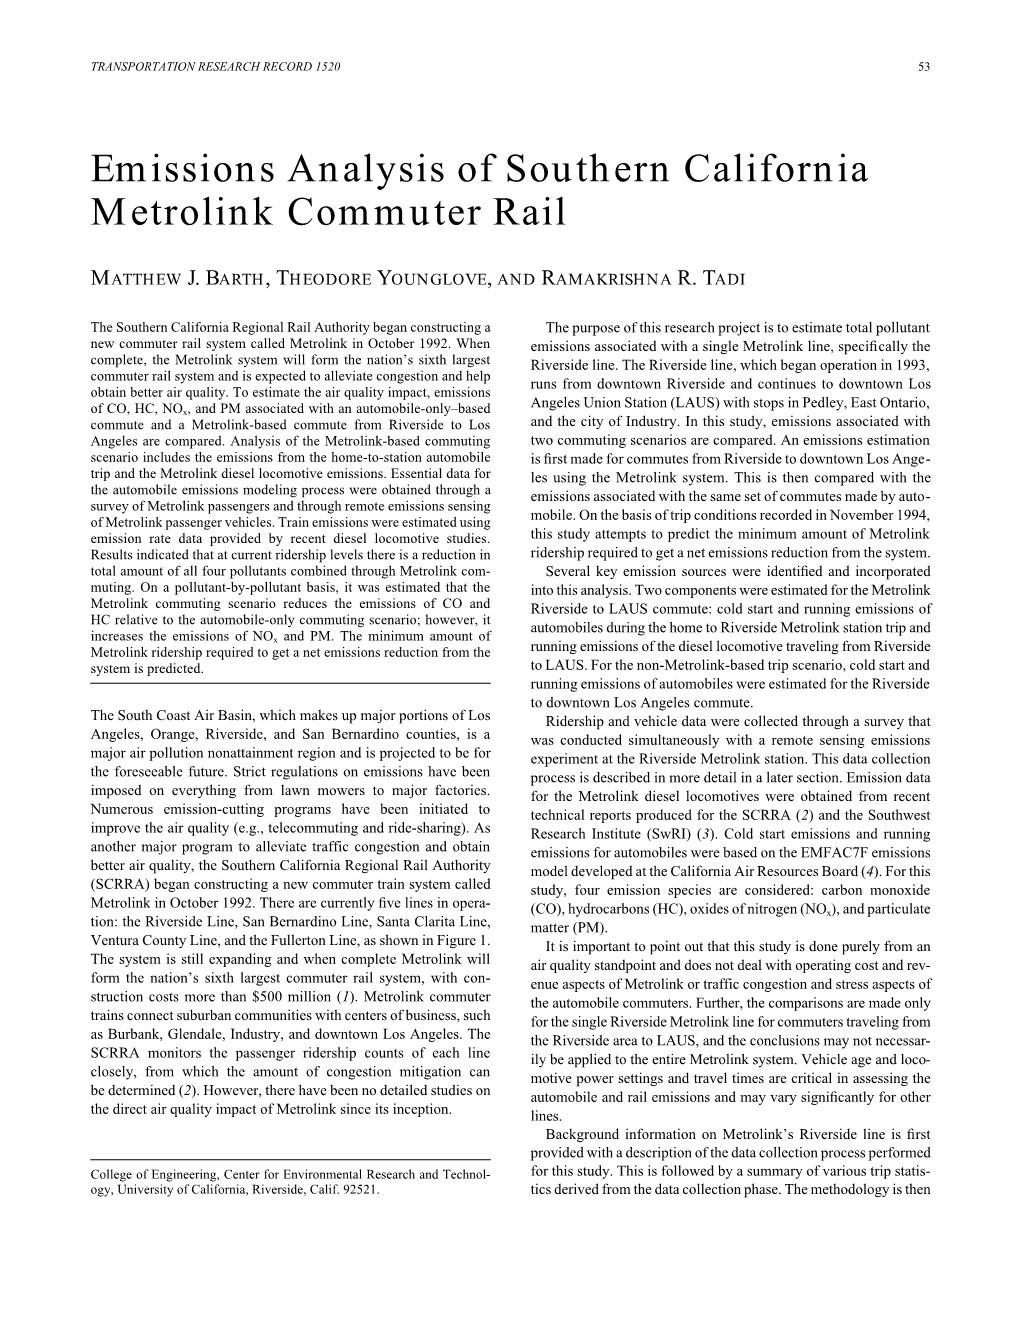 Emissions Analysis of Southern California Metrolink Commuter Rail